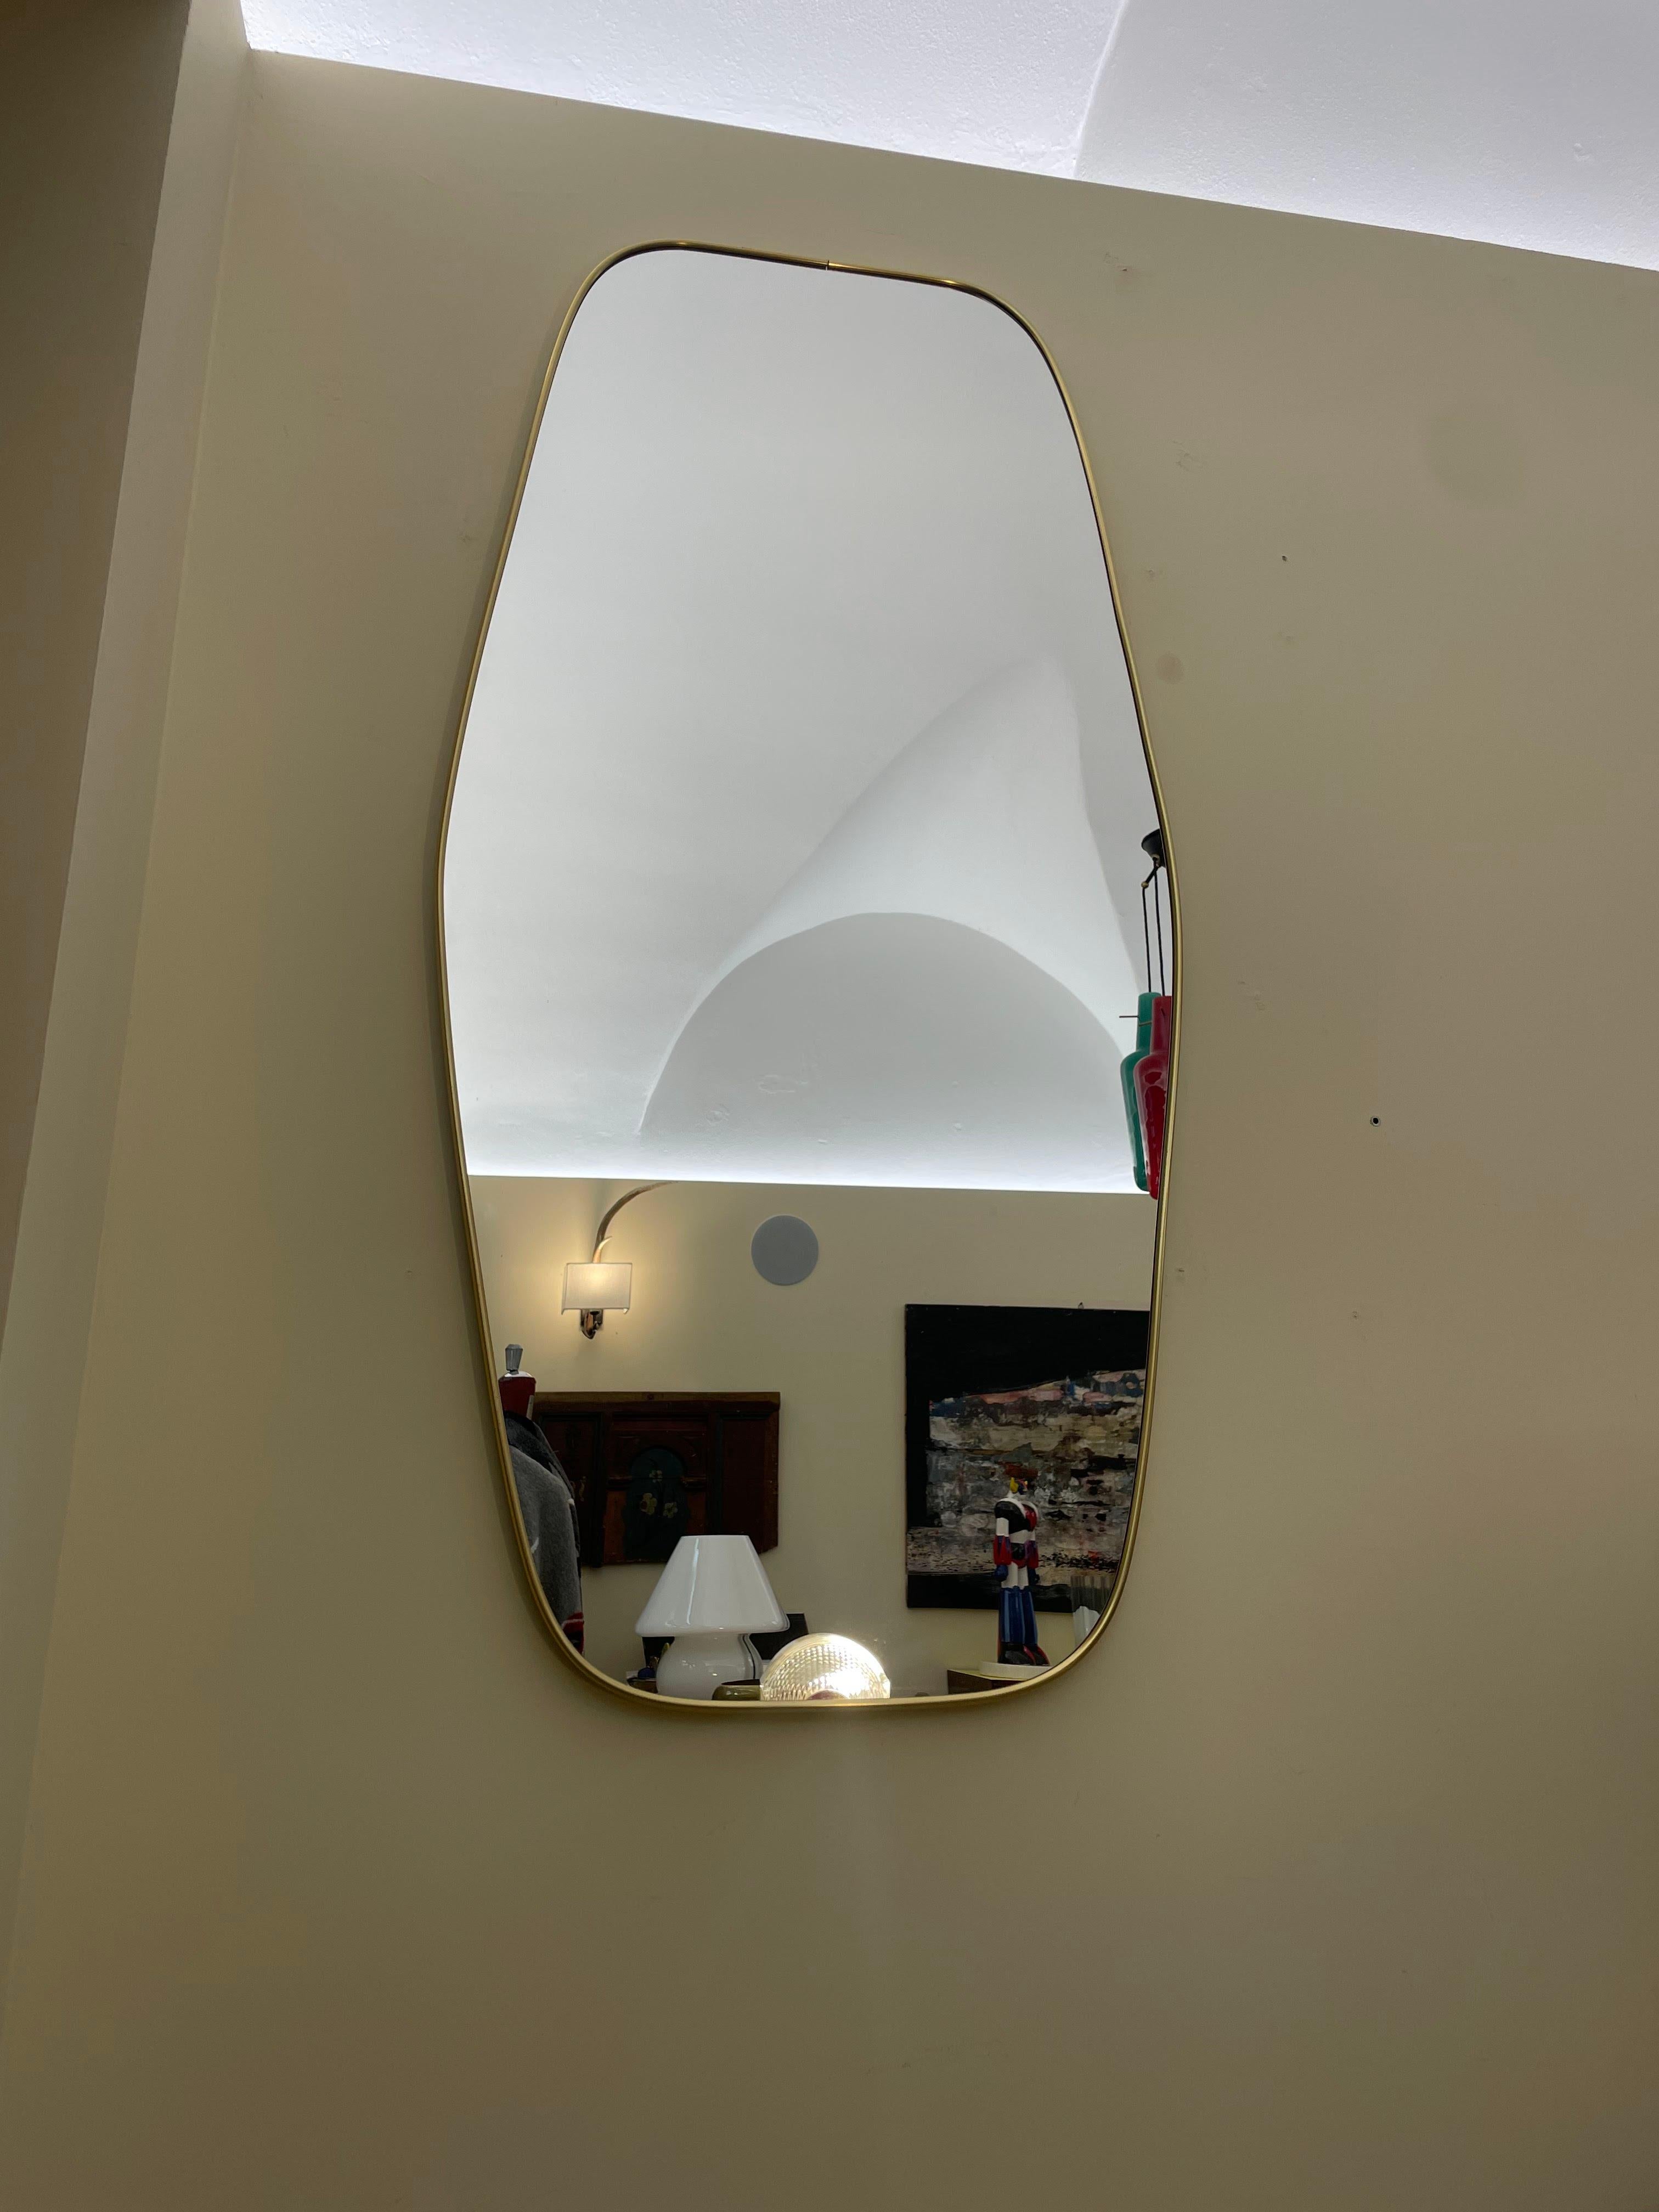 Italian Grand miroir des années 1950-60 de fabrication italienne